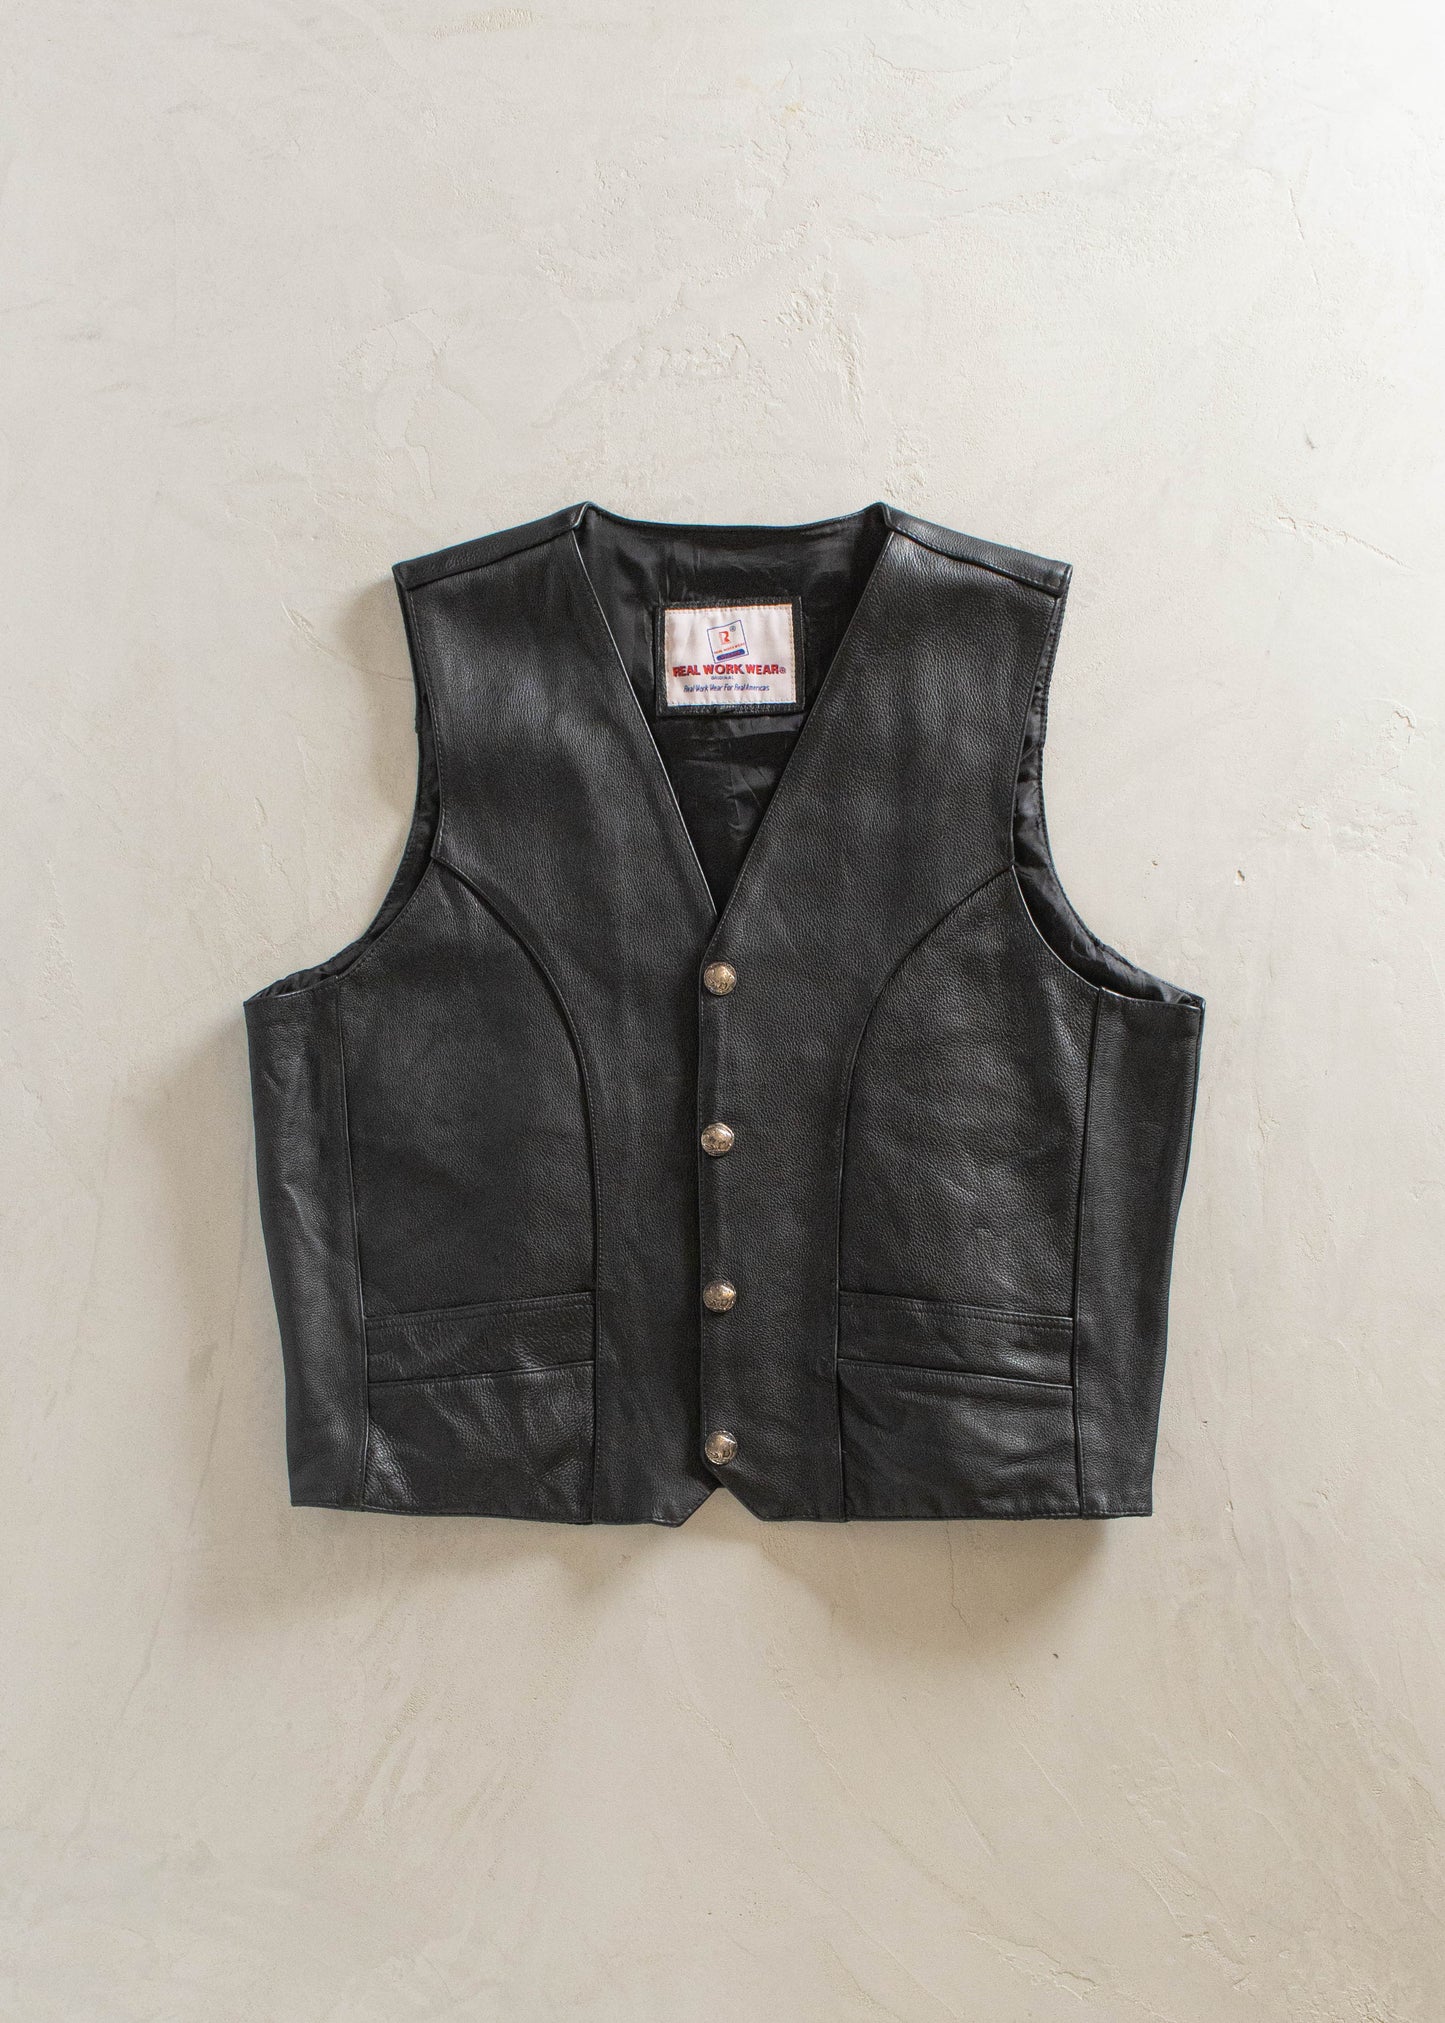 1980s Real Work Wear Harley Davidson Leather Vest Size L/XL